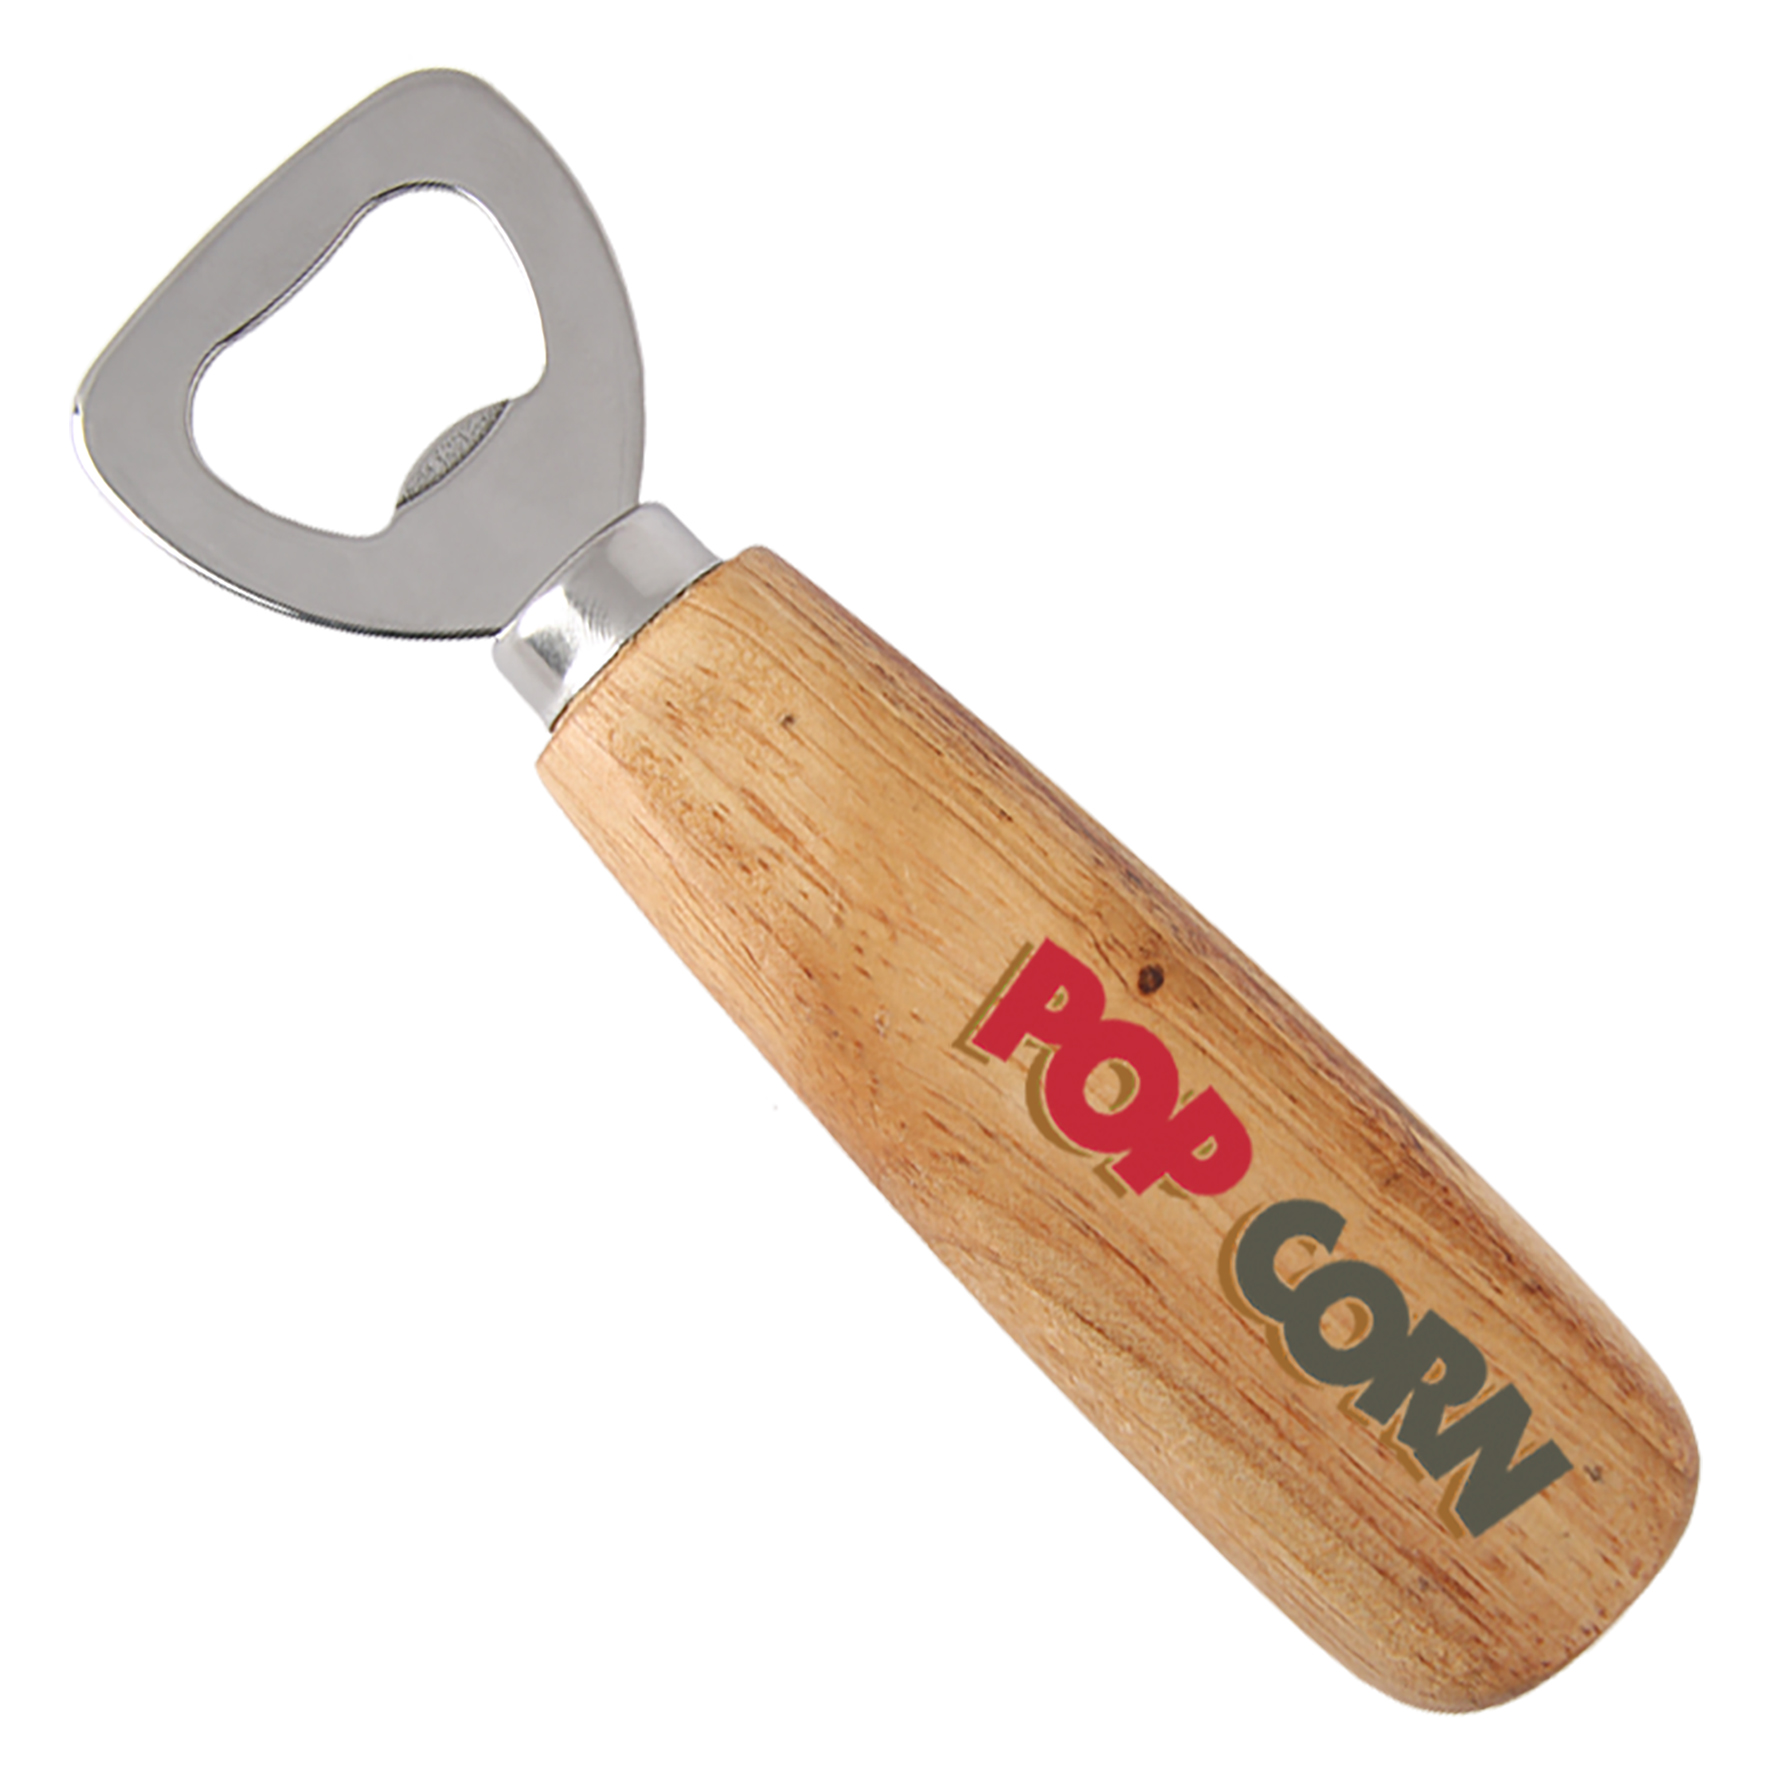 x840009 11 - Wooden bottle opener